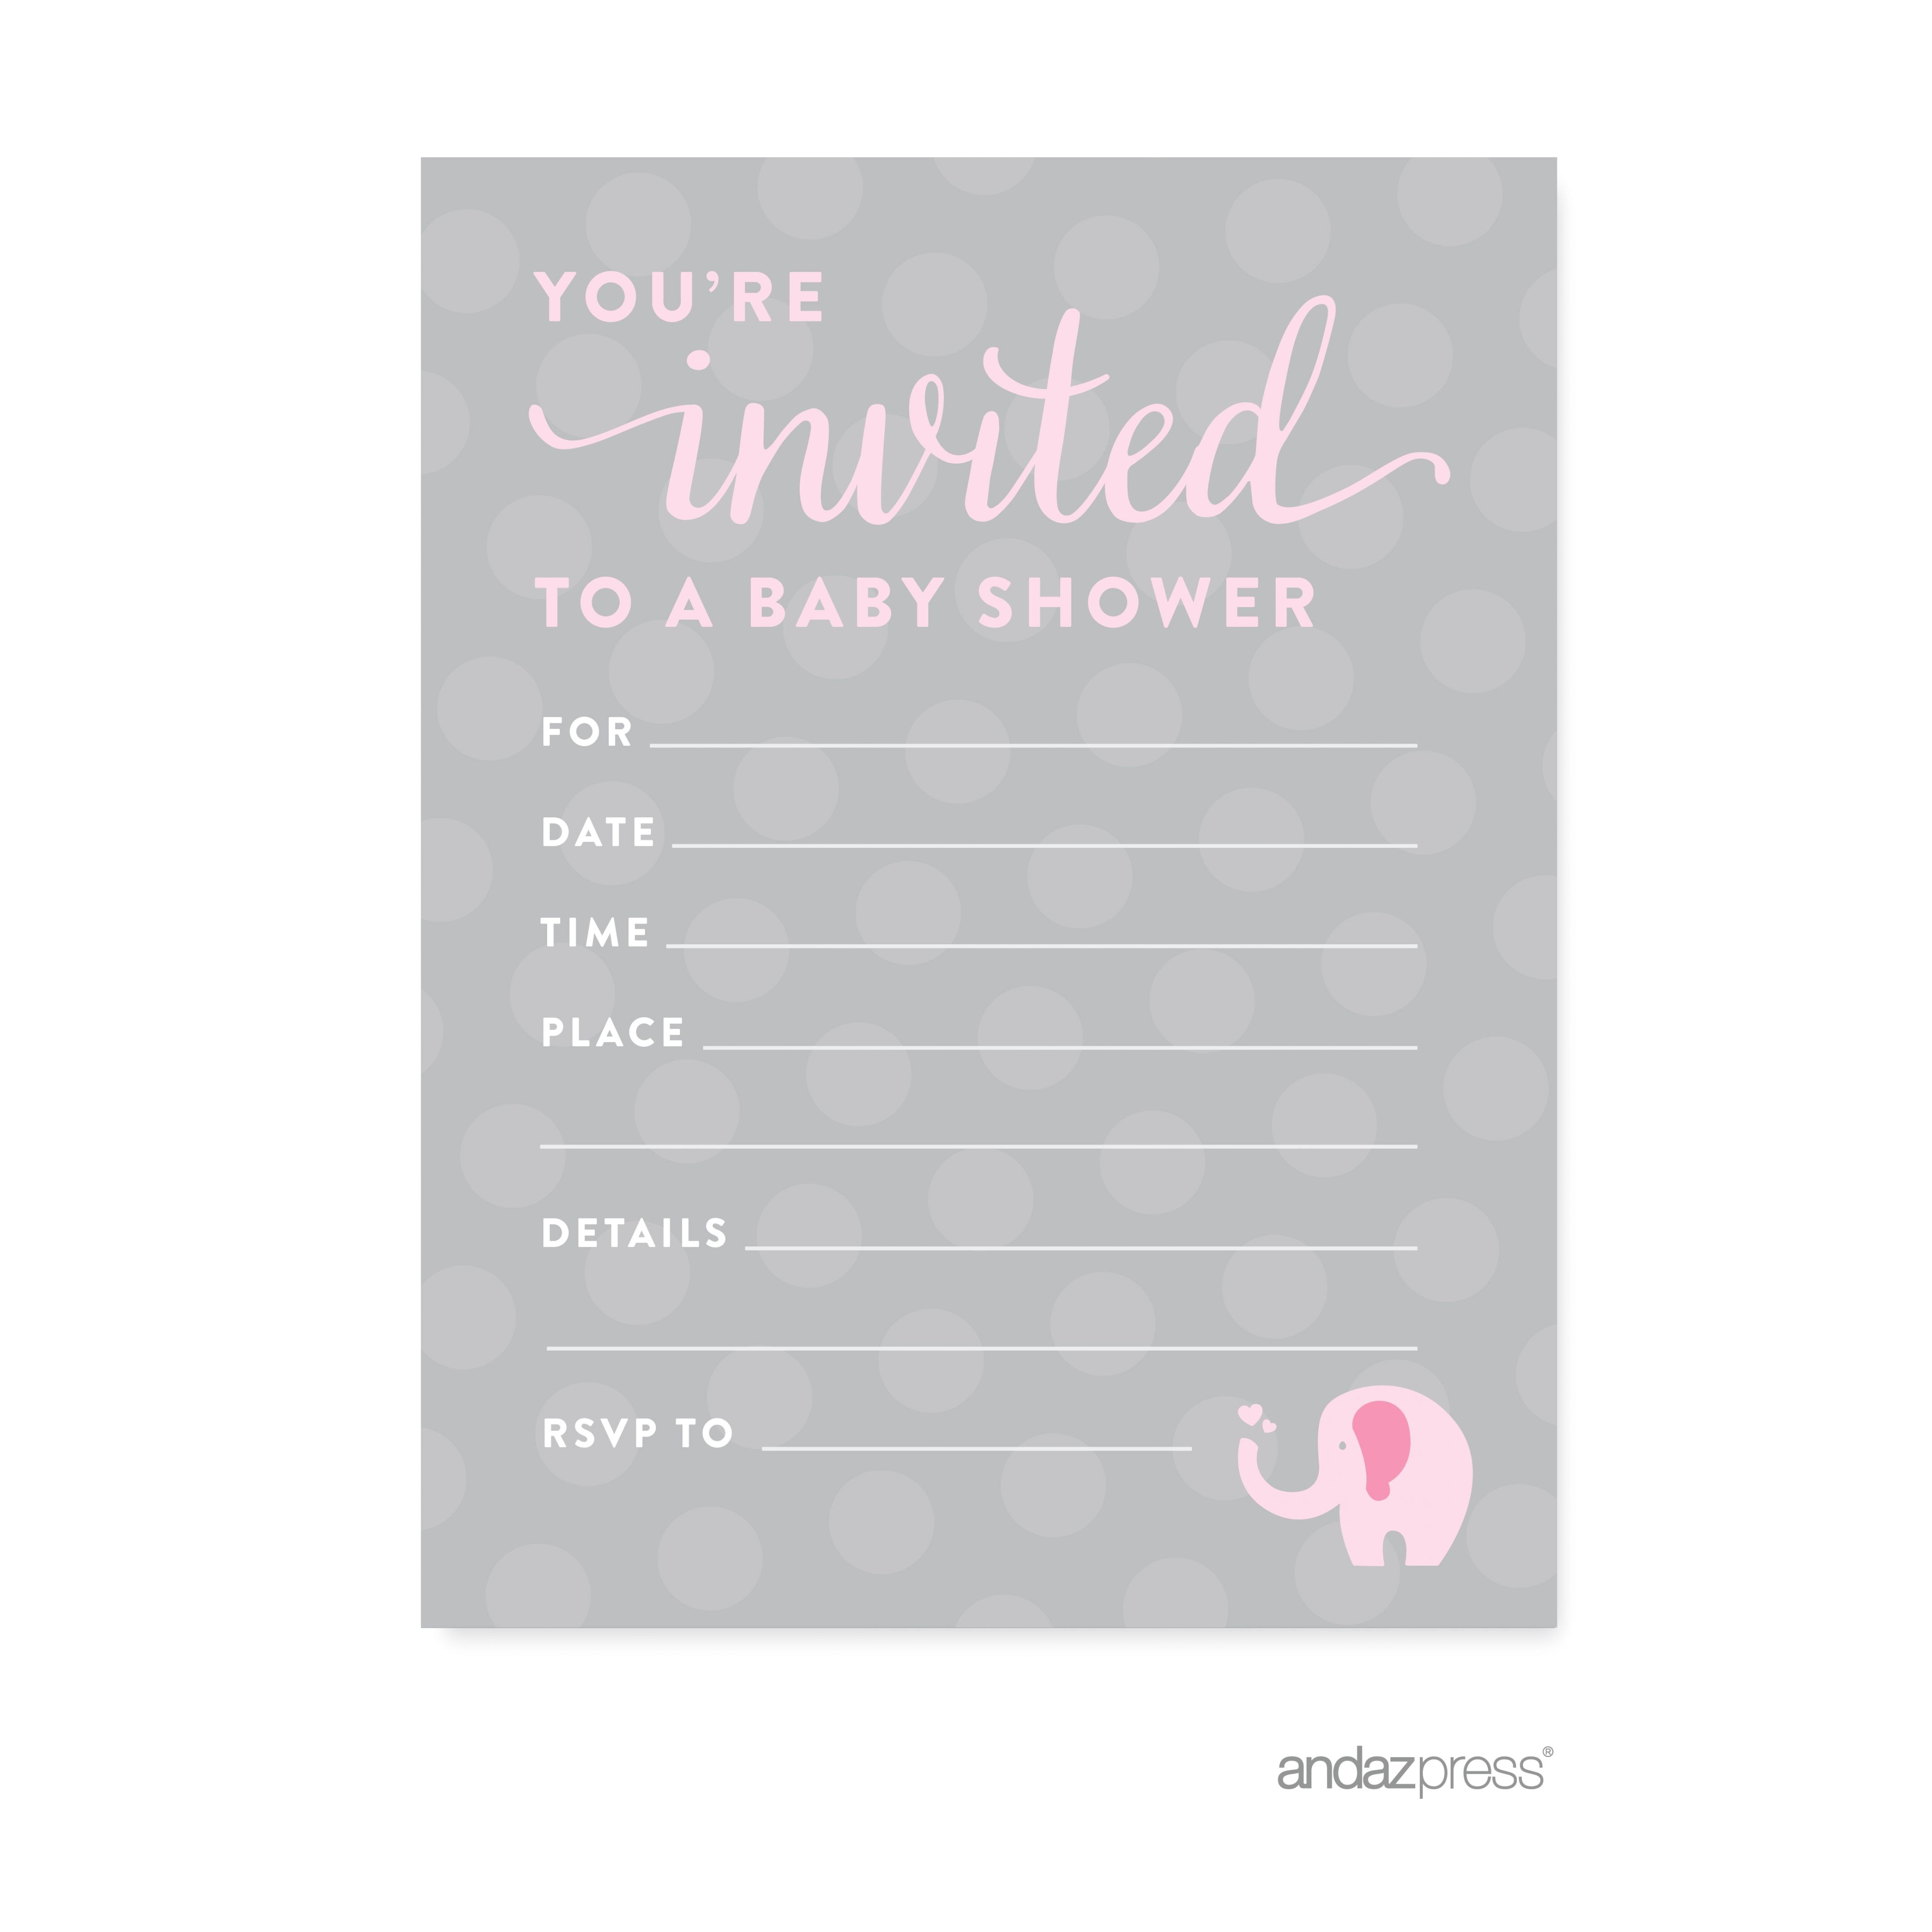 baby shower invites nz good ideas 4 girl elephant baby shower party blank invitations 20 pack walmart